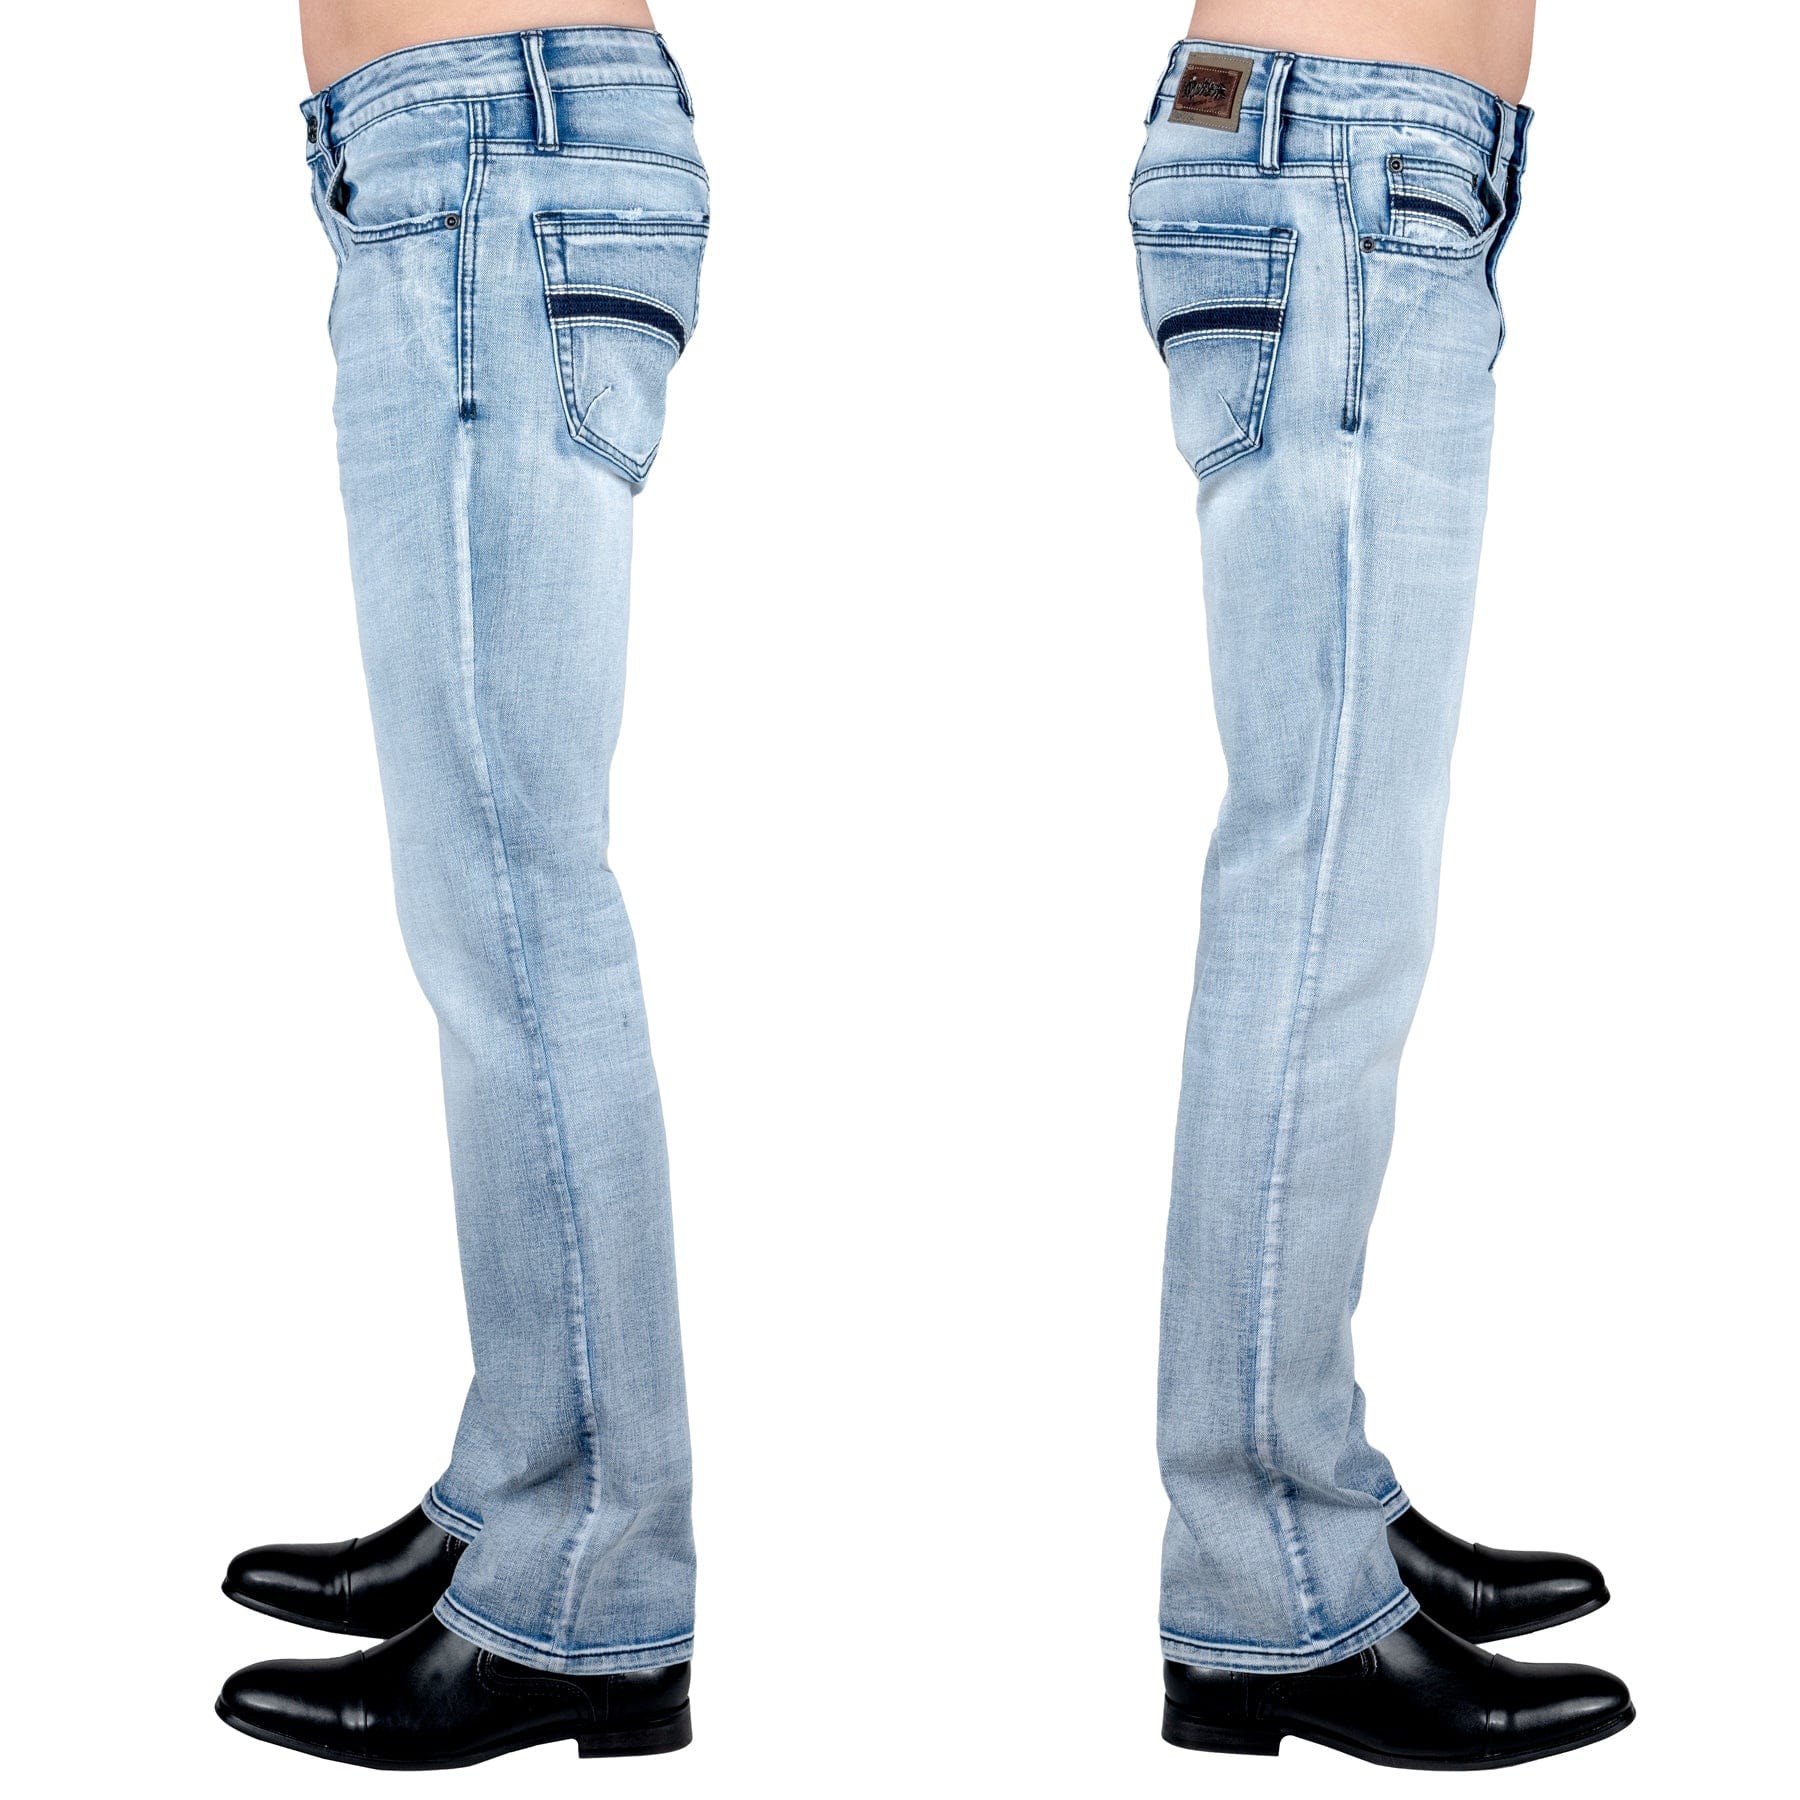 Wornstar Clothing Mens Jeans. Trailblazer Denim Pants - Classic Blue